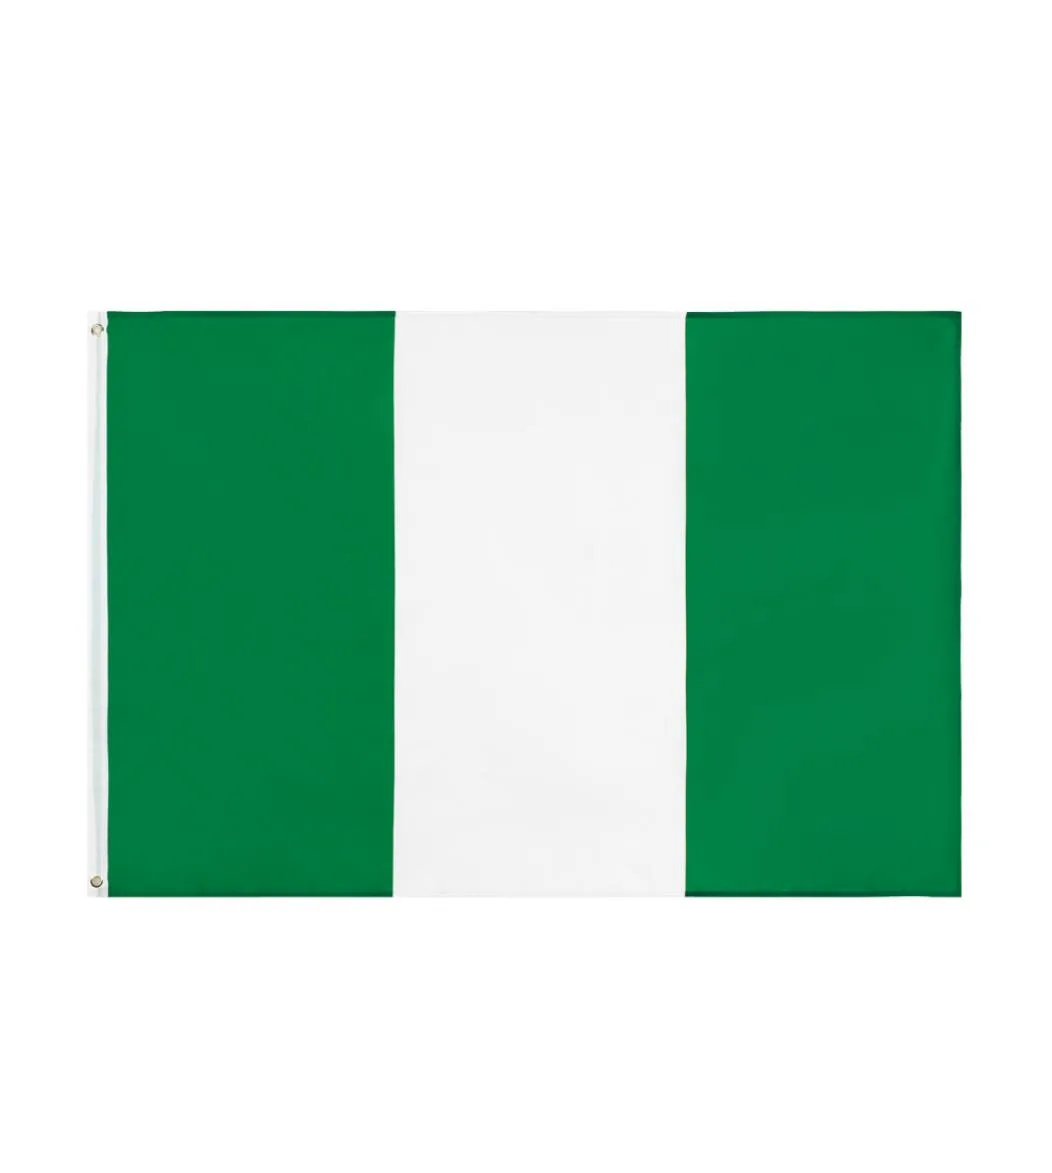 Shpping in Stock Nations Flags 3x5ft 90x150cm Green White Nga Ng Nigeria Flag of Nigerian Banner för inomhus utomhusdekoratio1042121